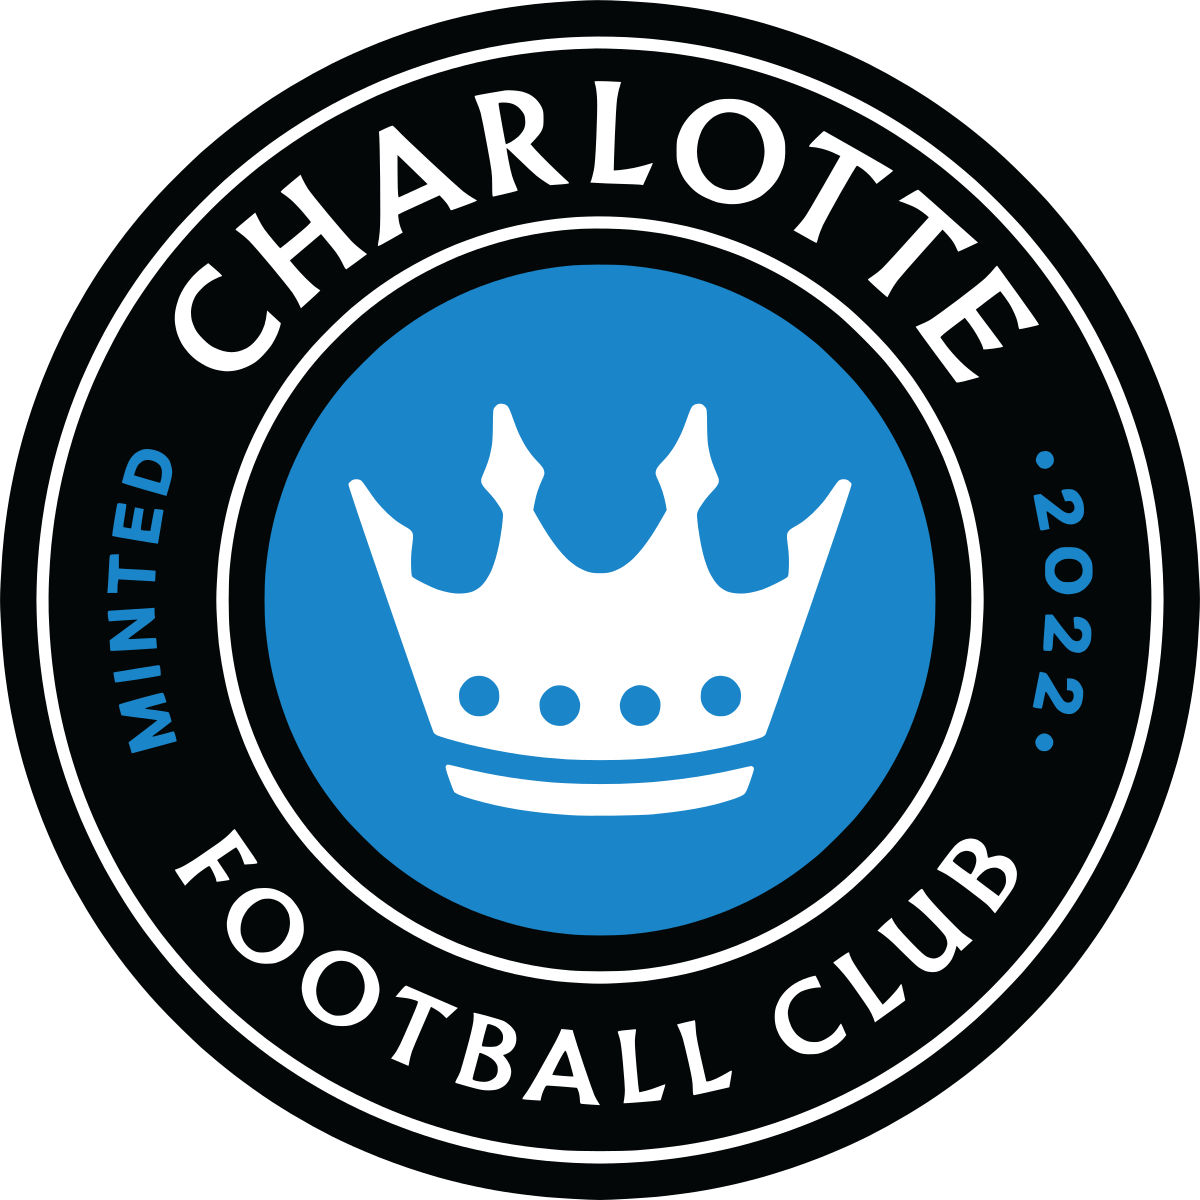 Charlotte FC vs New York City Prediction: NYCFC come bearing gifts!